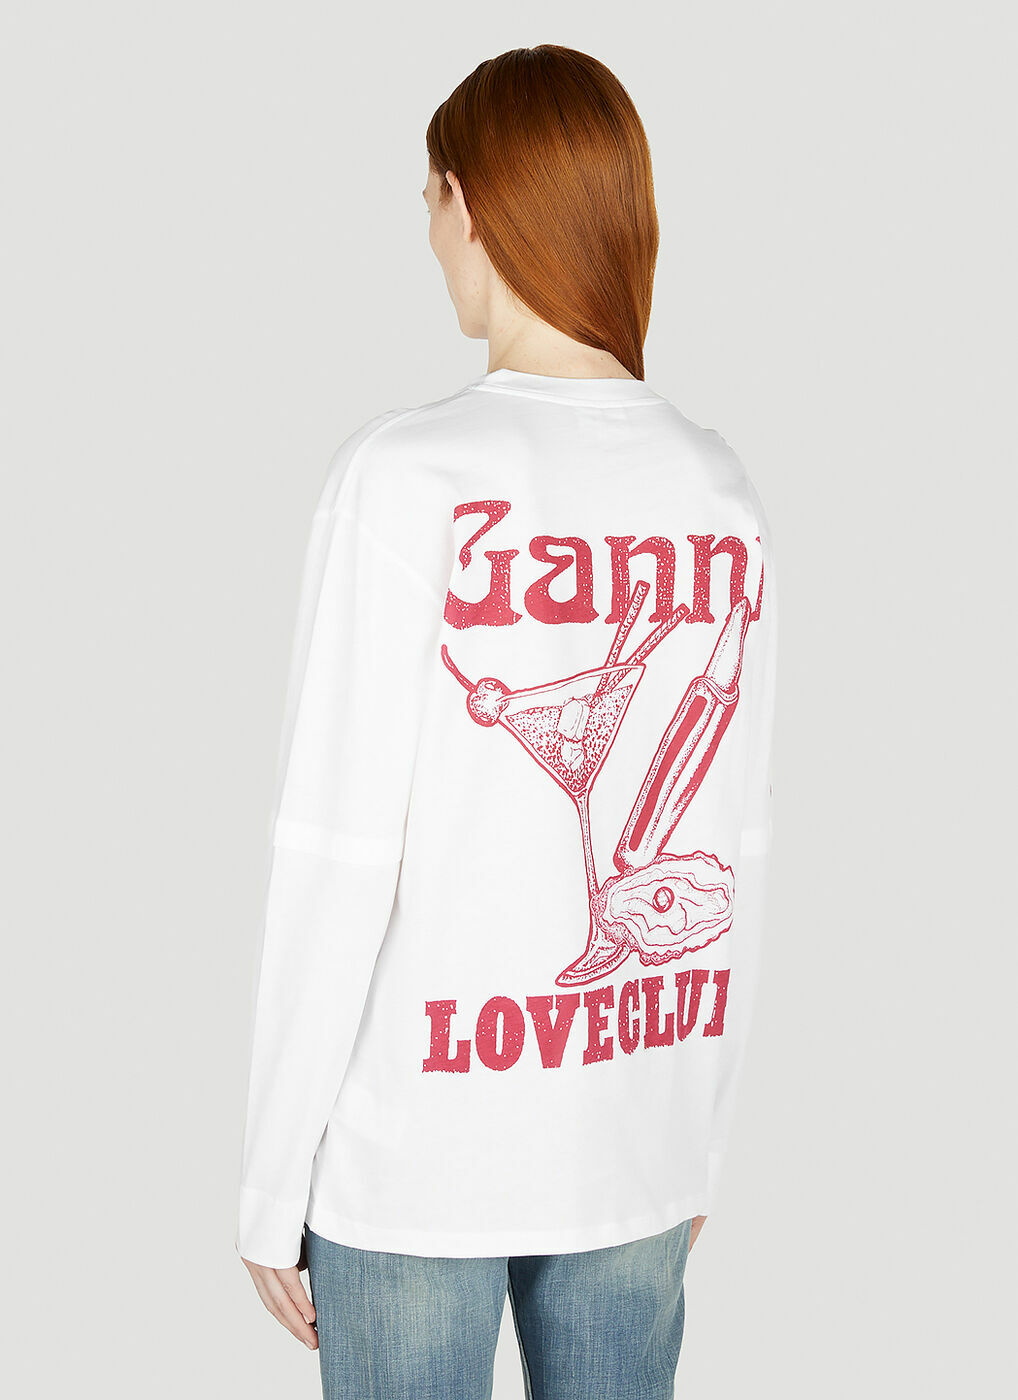 GANNI Women's Love Club Layered Long Sleeve T-Shirt in White